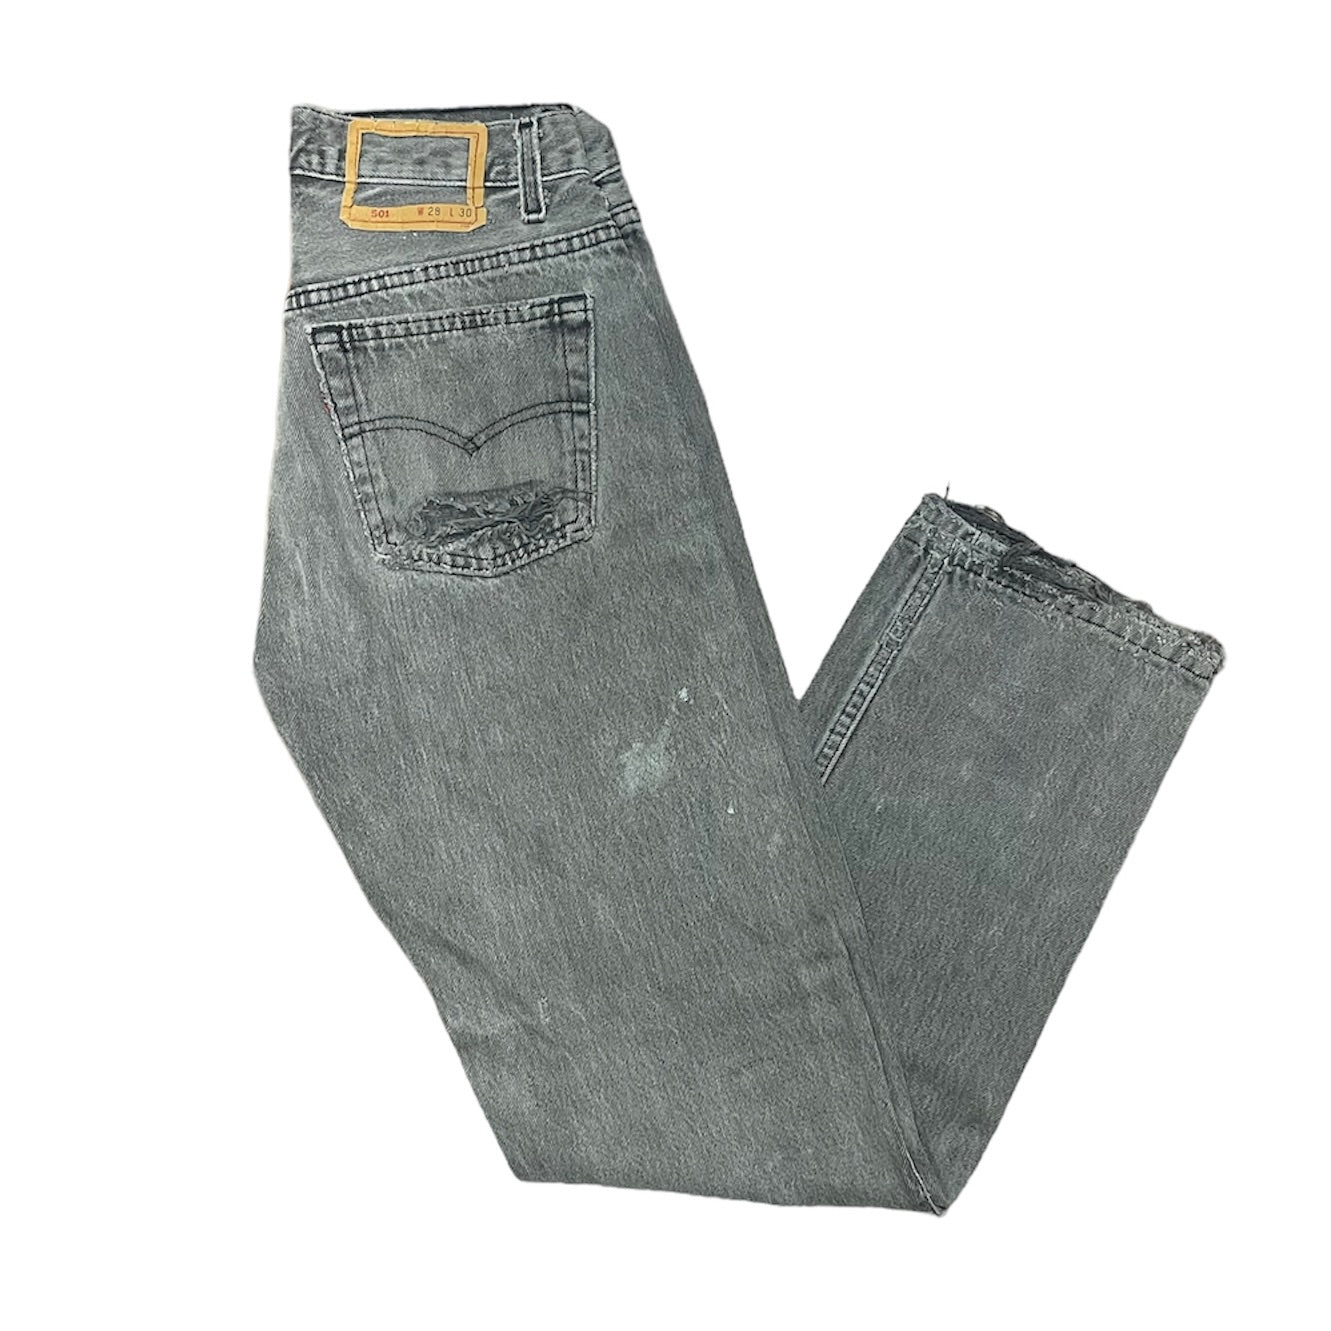 Vintage Levis 501 Distressed Grey Jeans